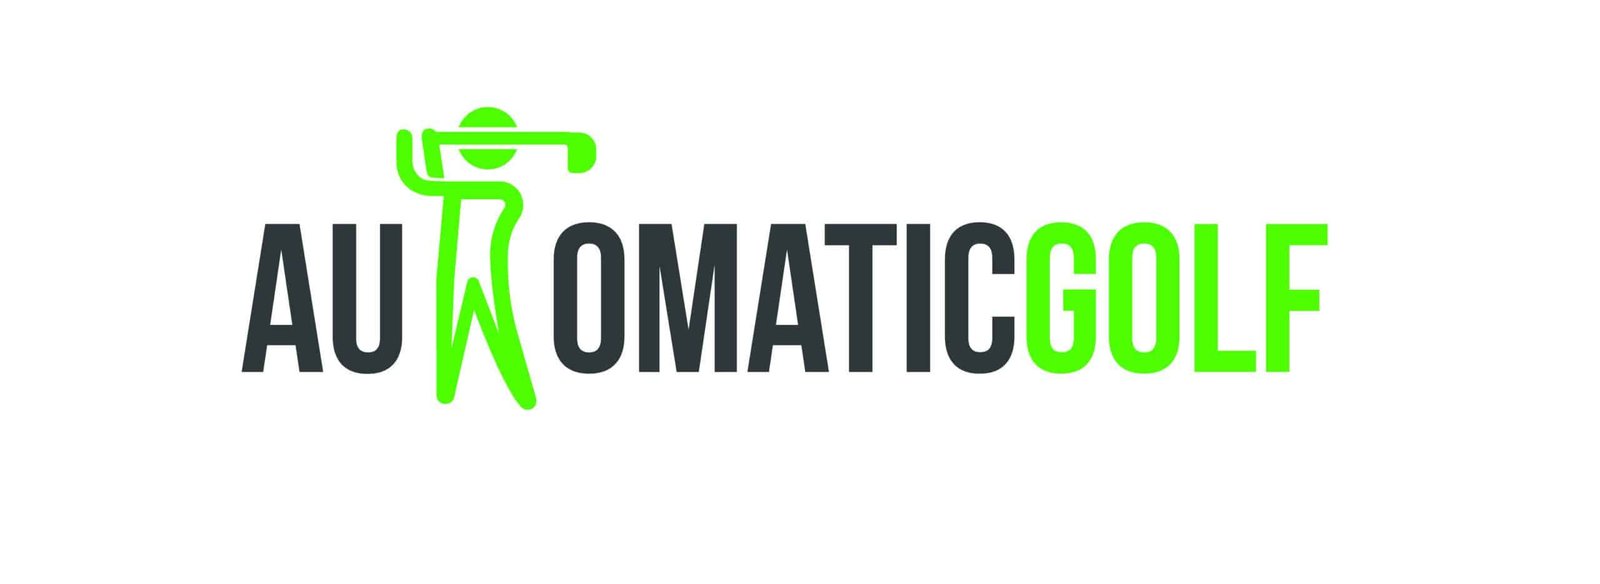 automaticgolf_logo(1)